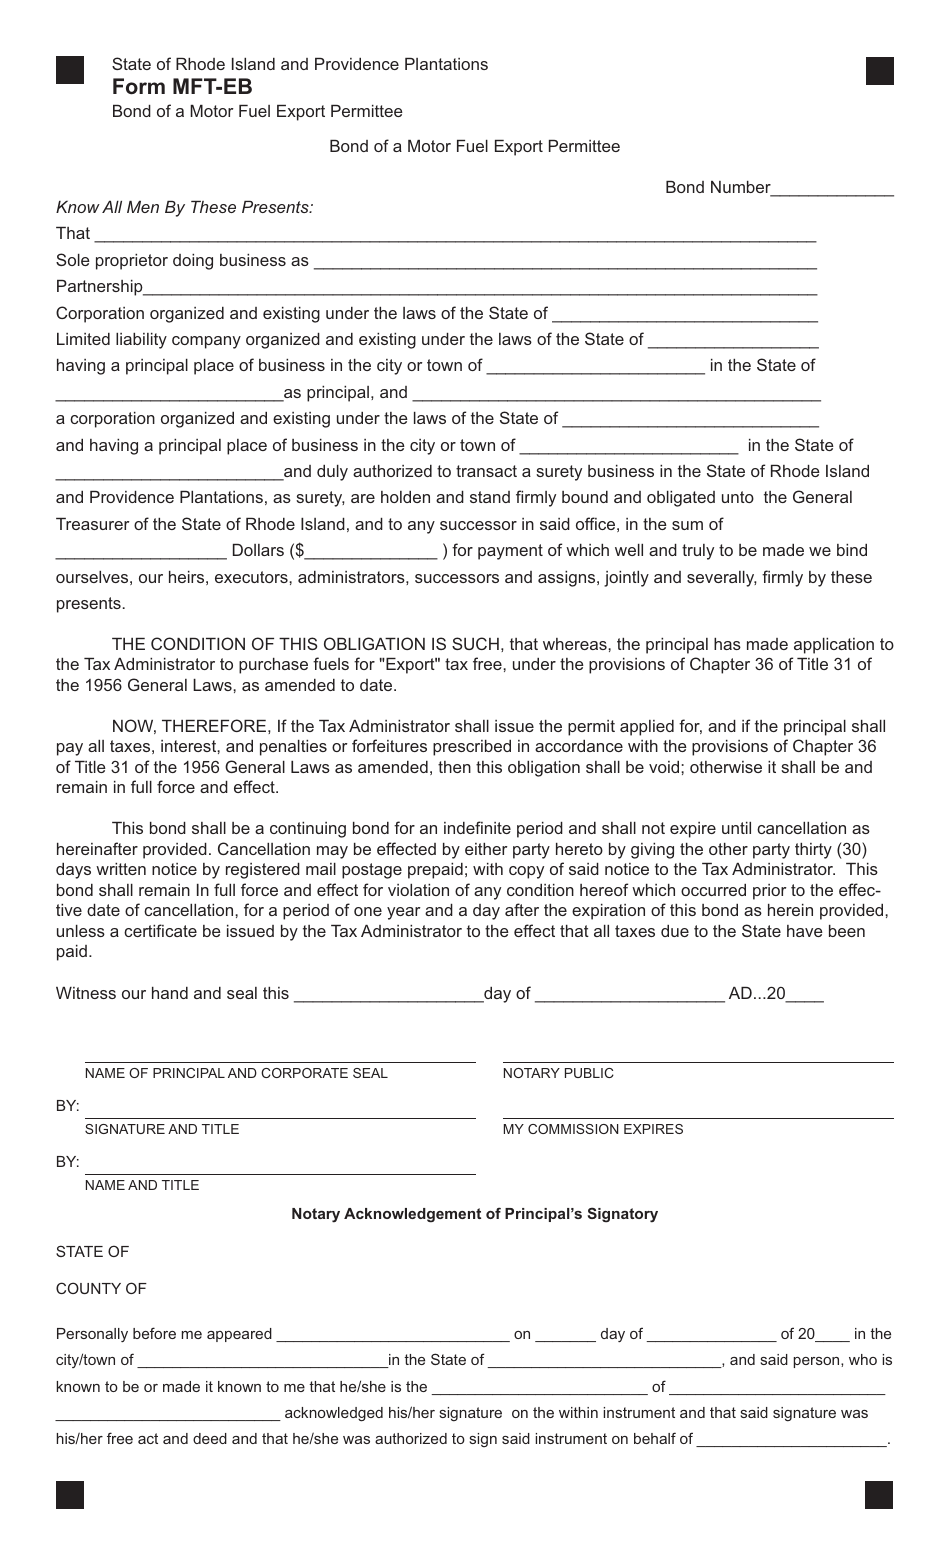 Form MFT-EB Bond of a Motor Fuel Export Permittee - Rhode Island, Page 1